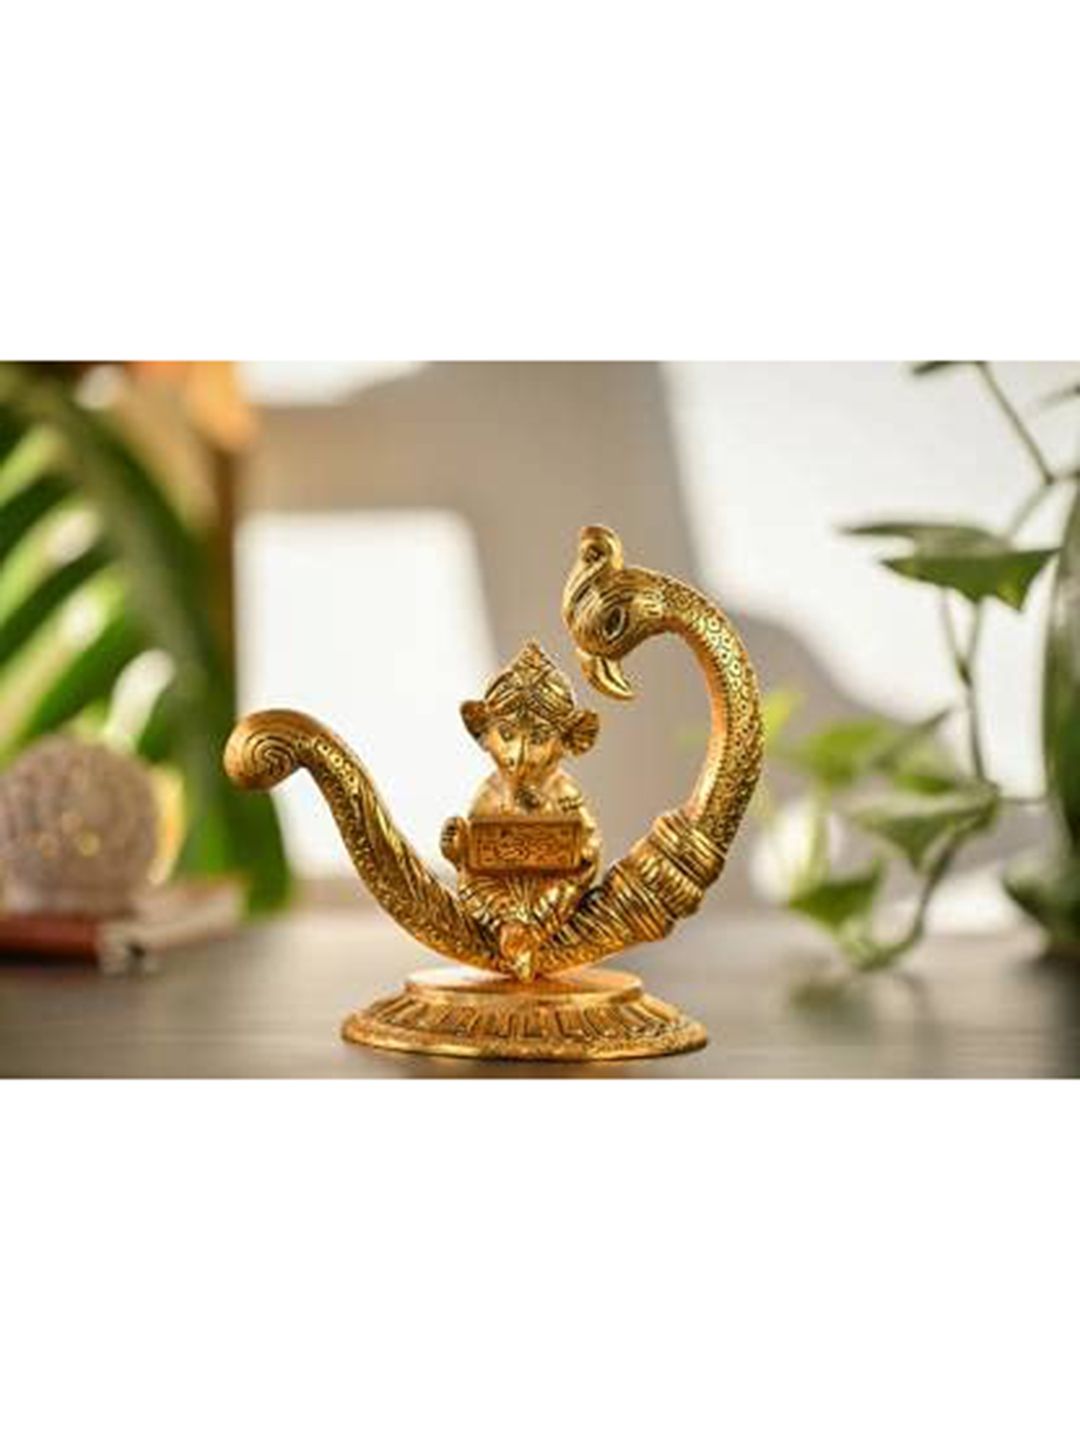 Fashion Bizz Gold-Toned Textured Ganesha Statue Showpiece Price in India